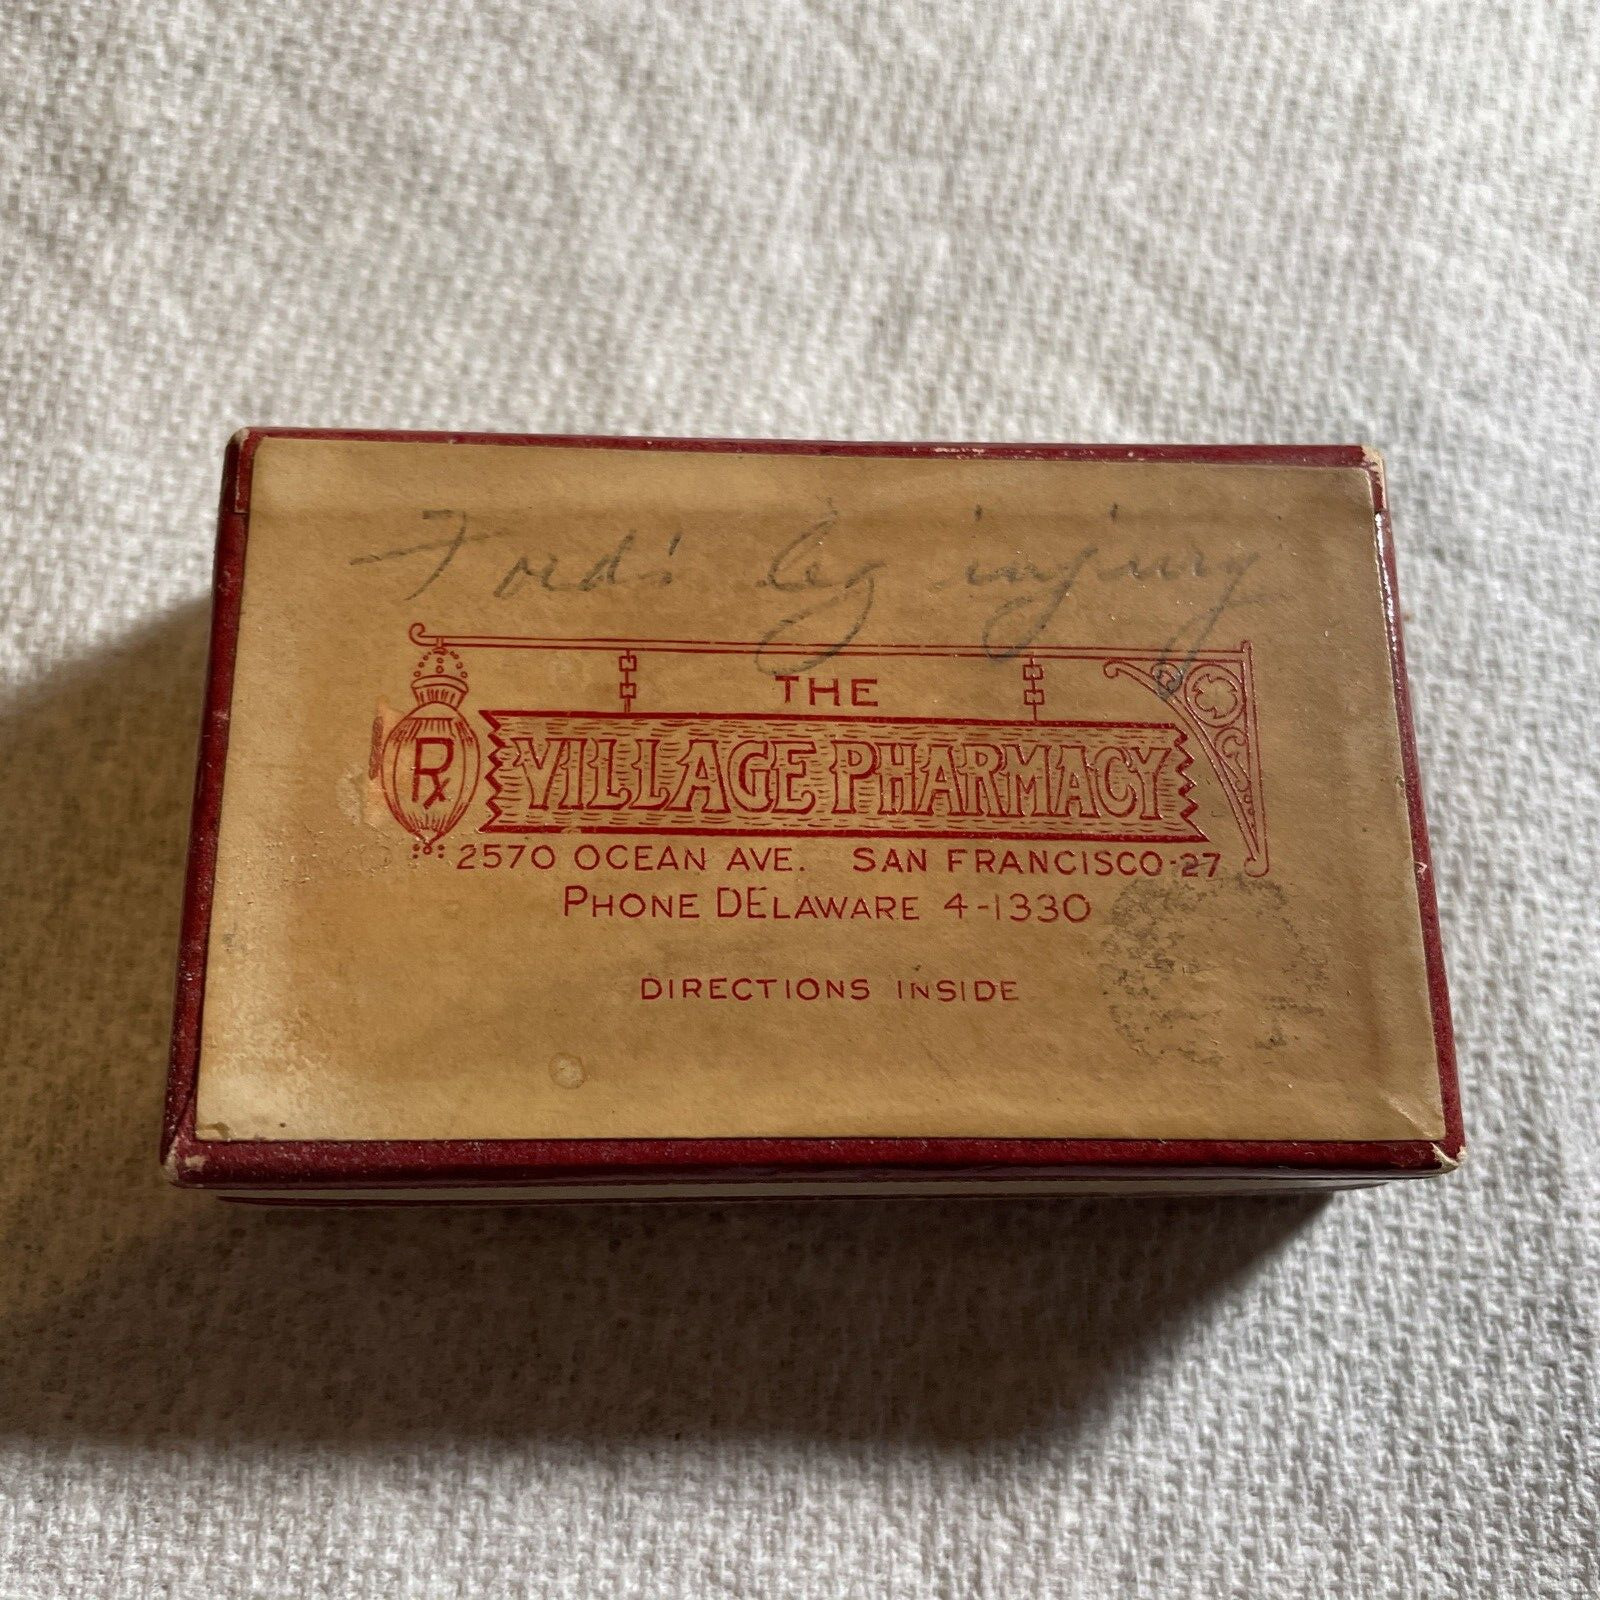 VILLAGE Pharmacy, SAN FRANCISCO, CA Pharmacists RX Pill Box Drug Cardboard 1954